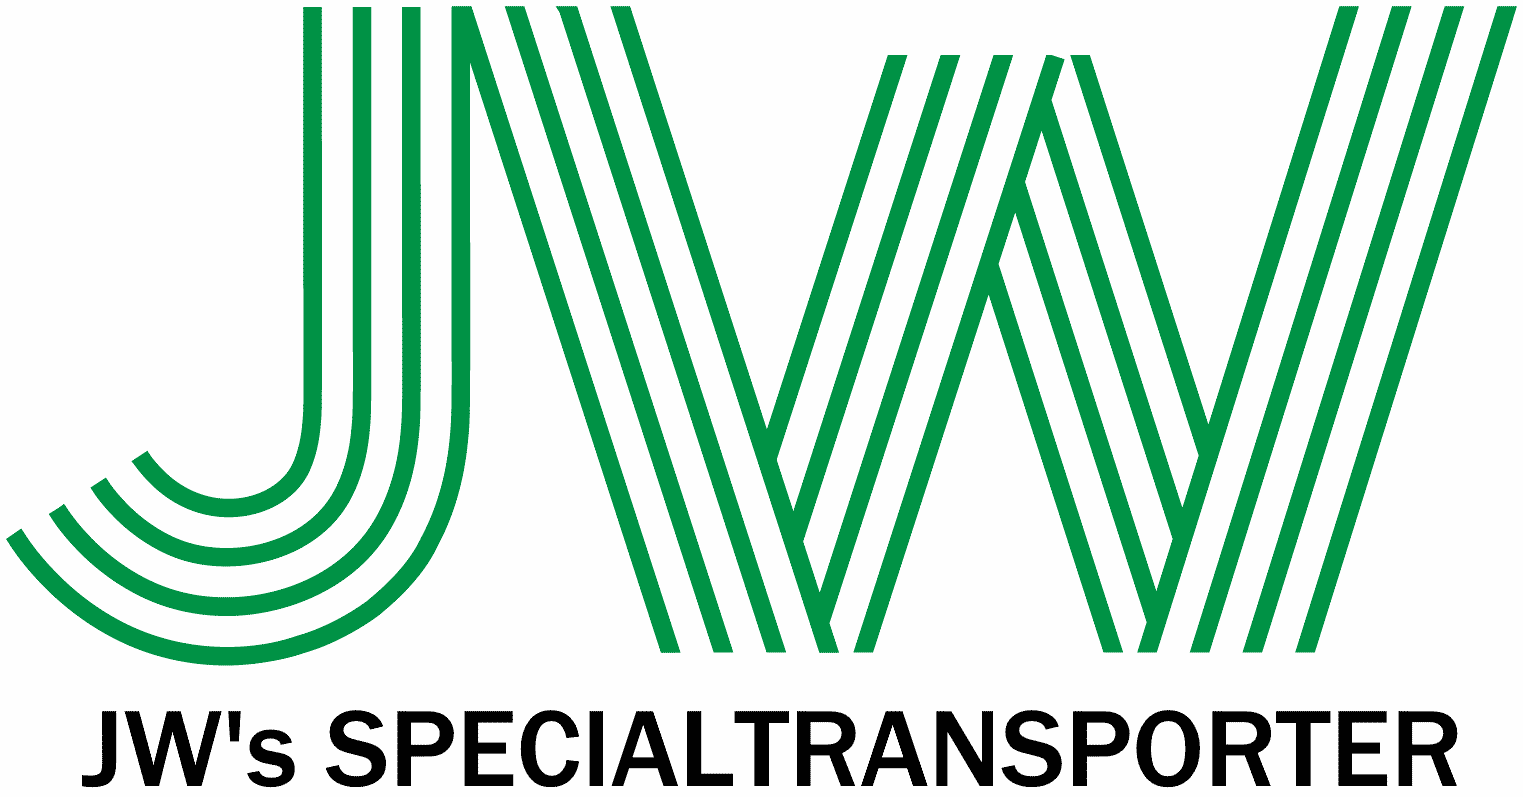 JW's Specialtransporter